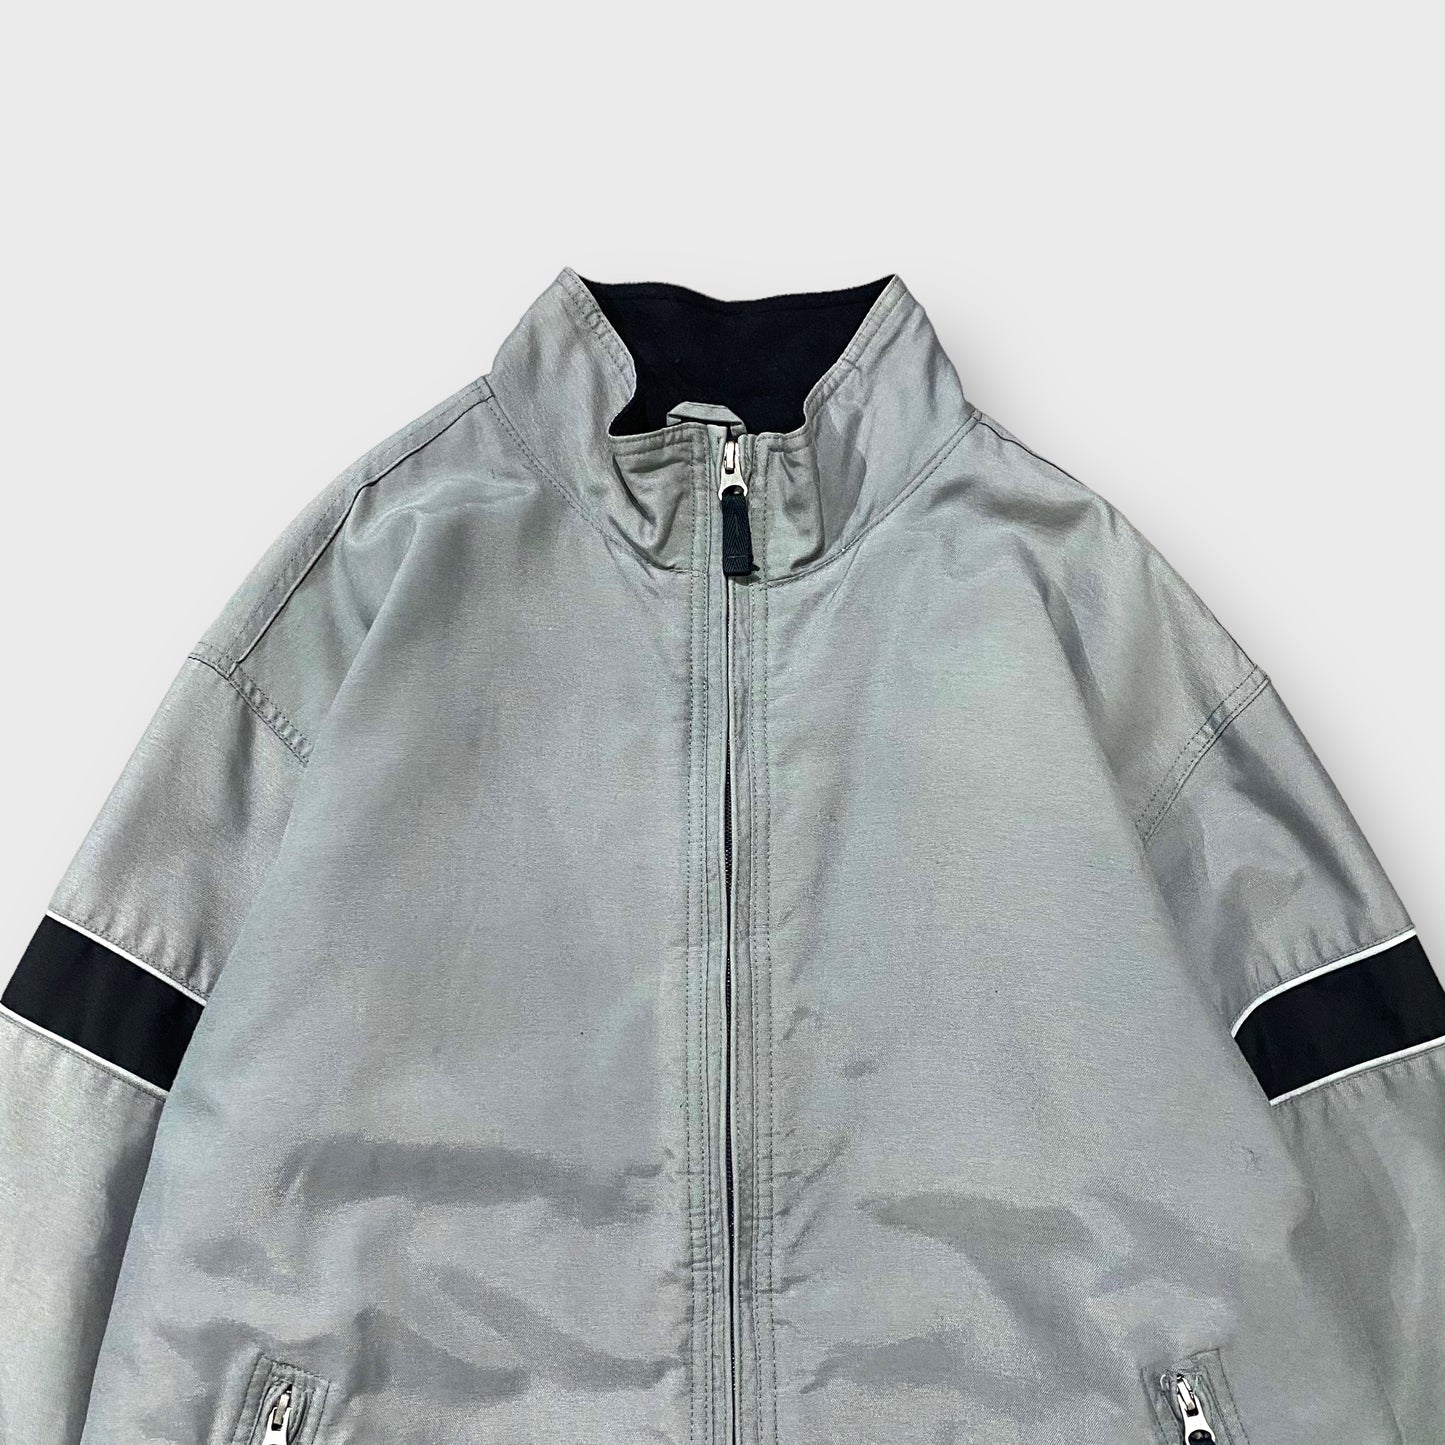 90's "GAP" High-neck nylon jacket